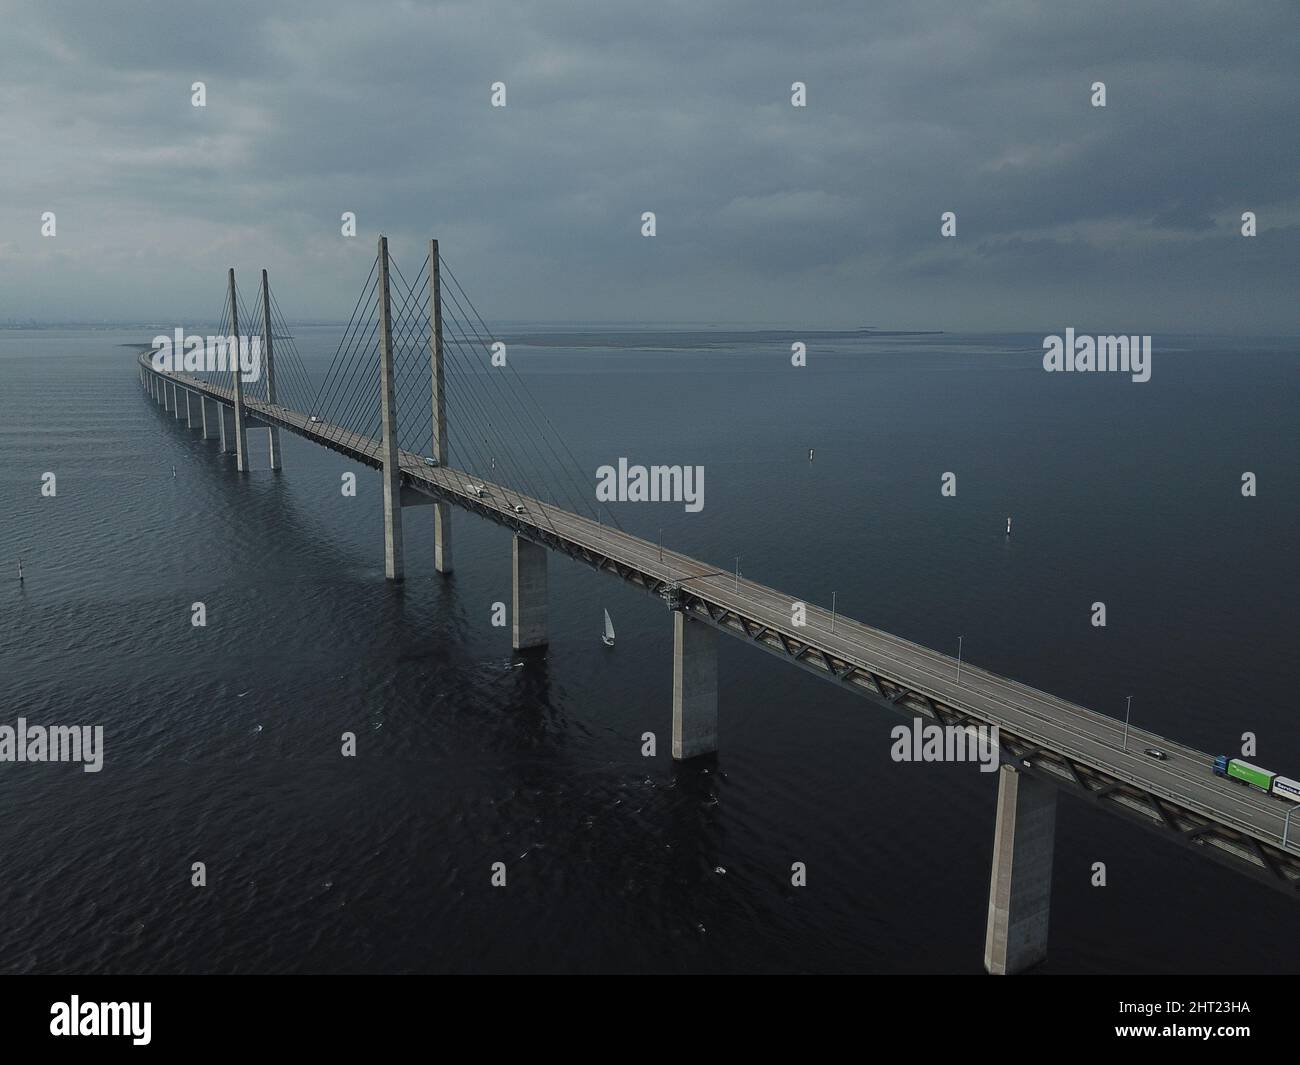 Aerial view of the Oresund bridge across the Oresund strait between Denmark and Sweden Stock Photo